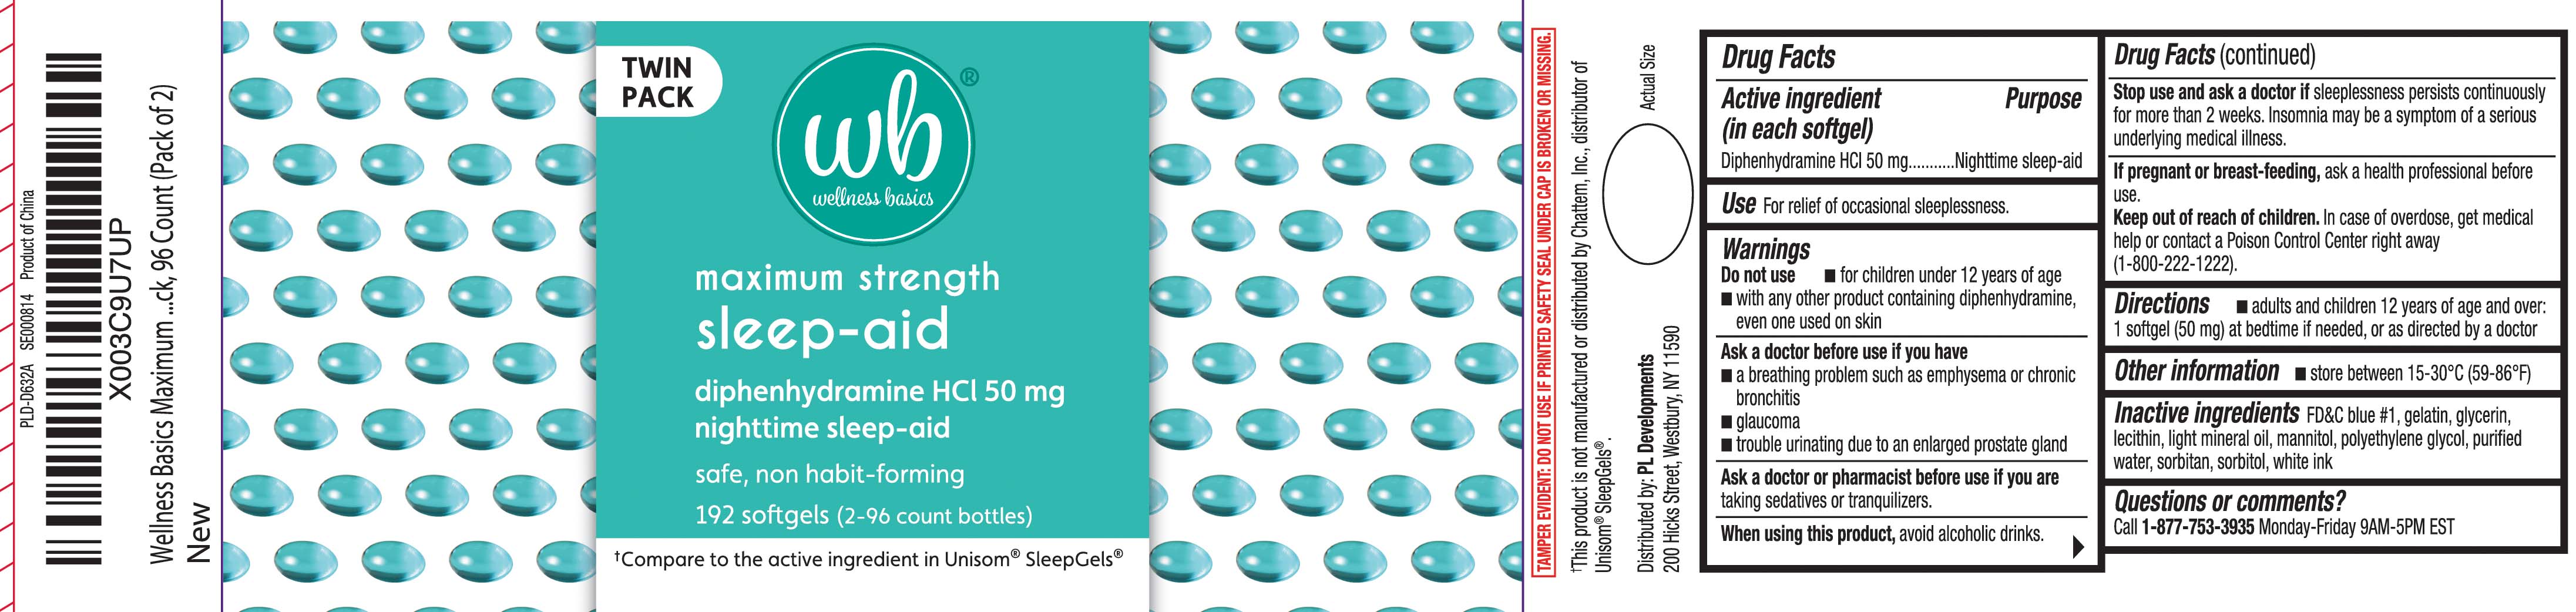 Diphenhydramine HCl 50 mg